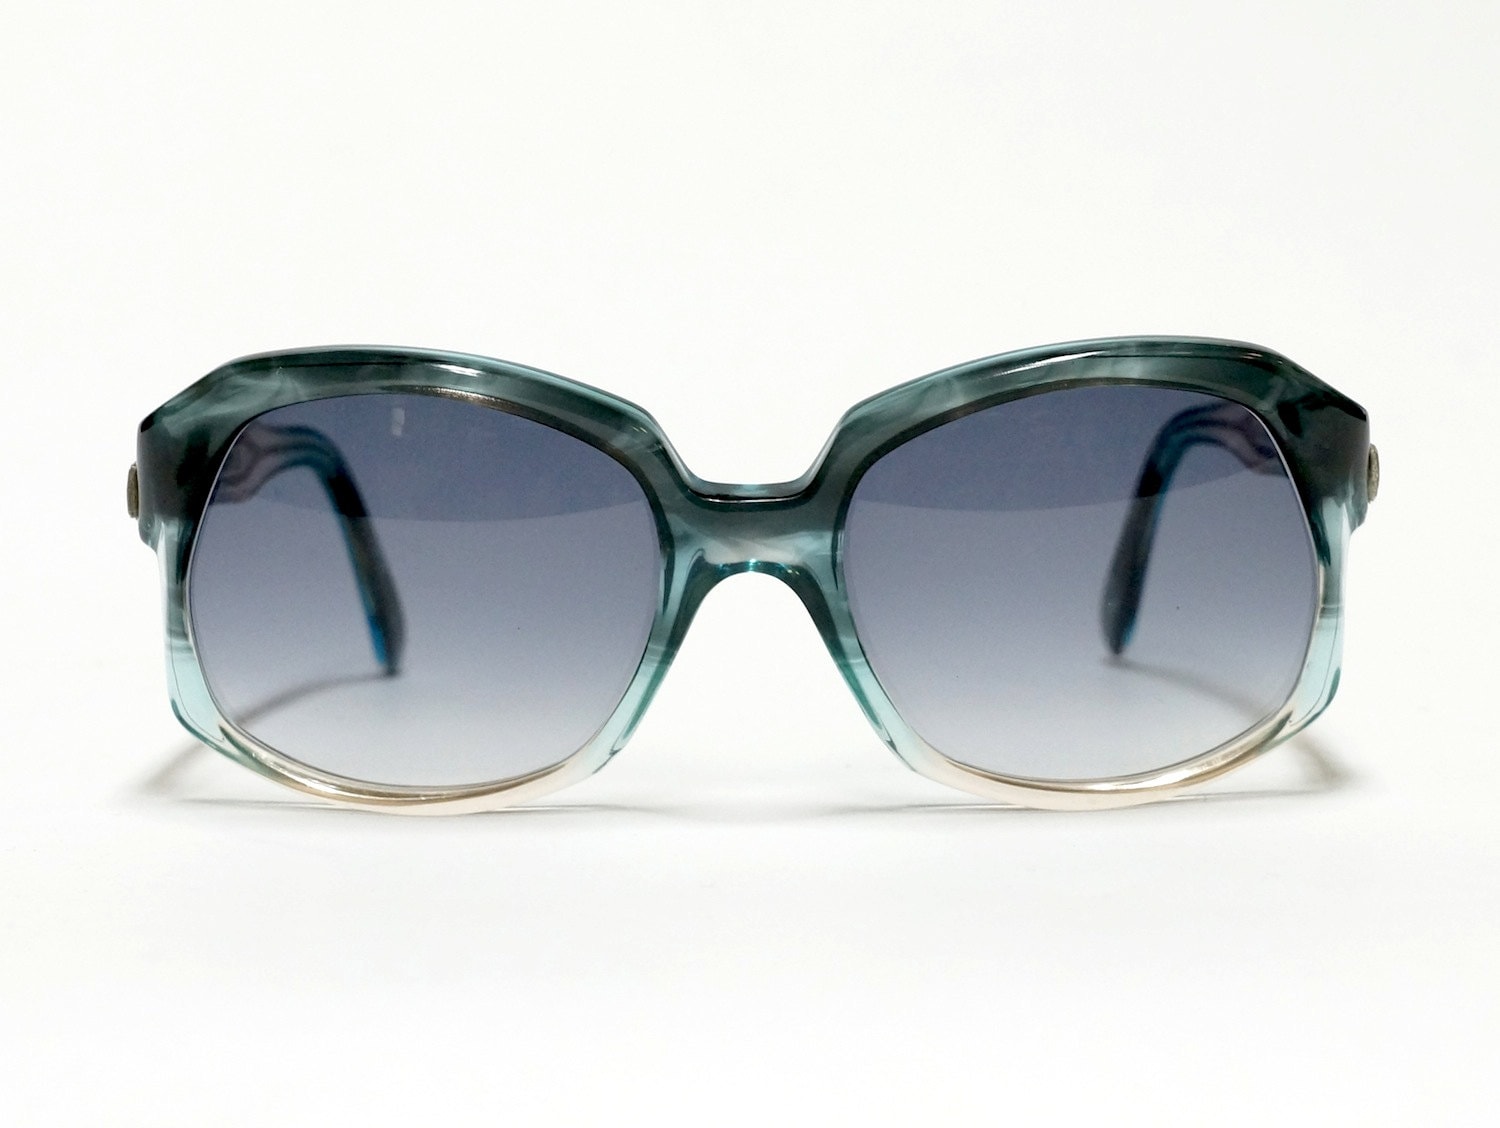 Givenchy vintage sunglasses – model Ora in NOS condition